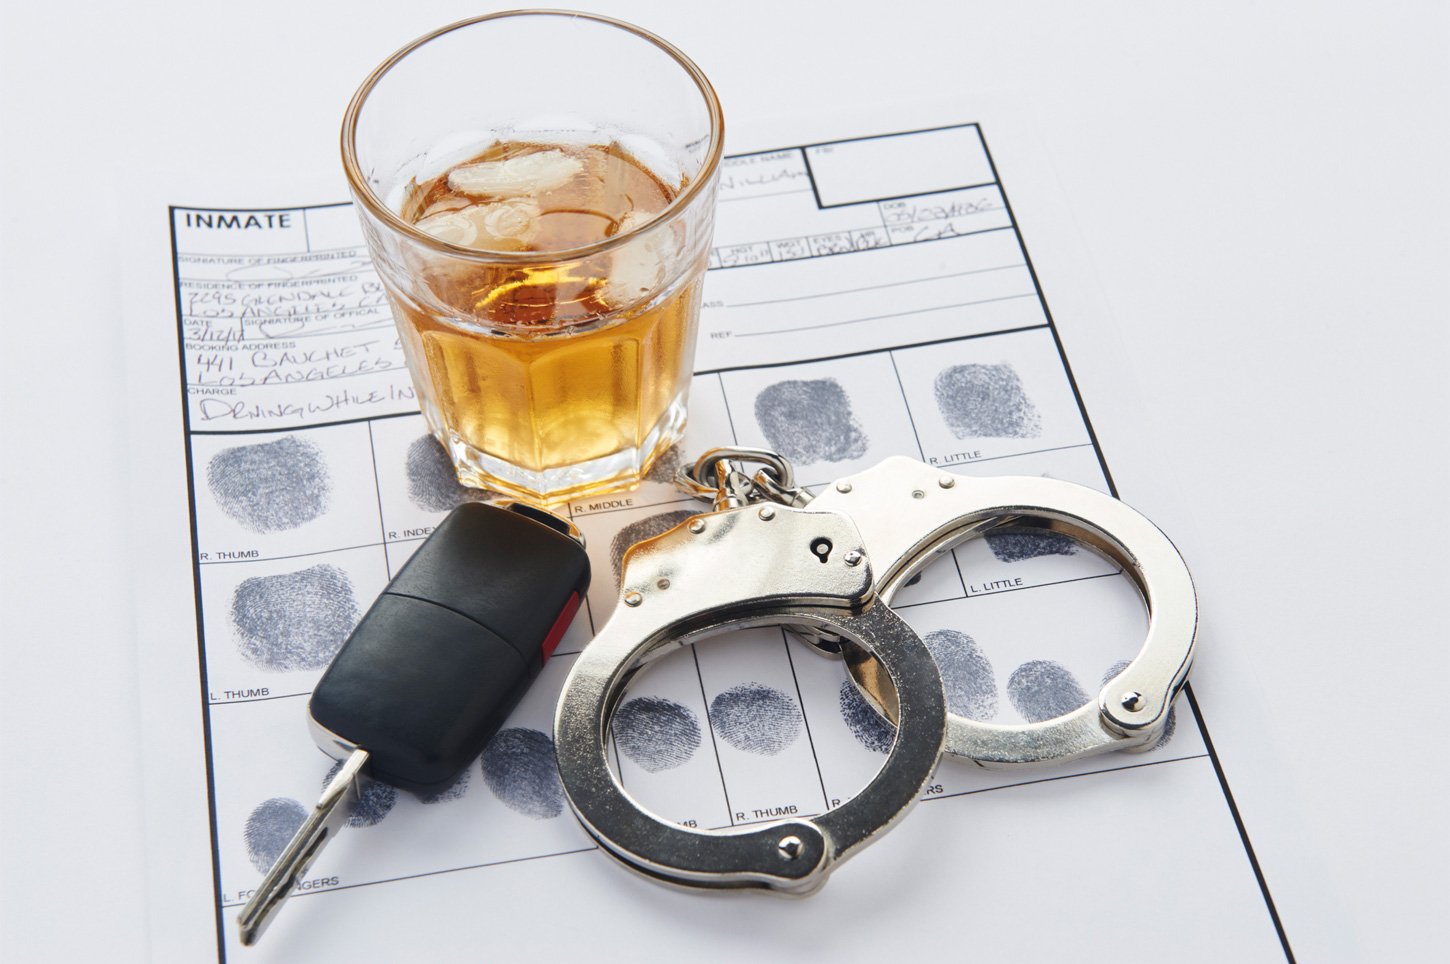 Car keys, drink and handcuffs